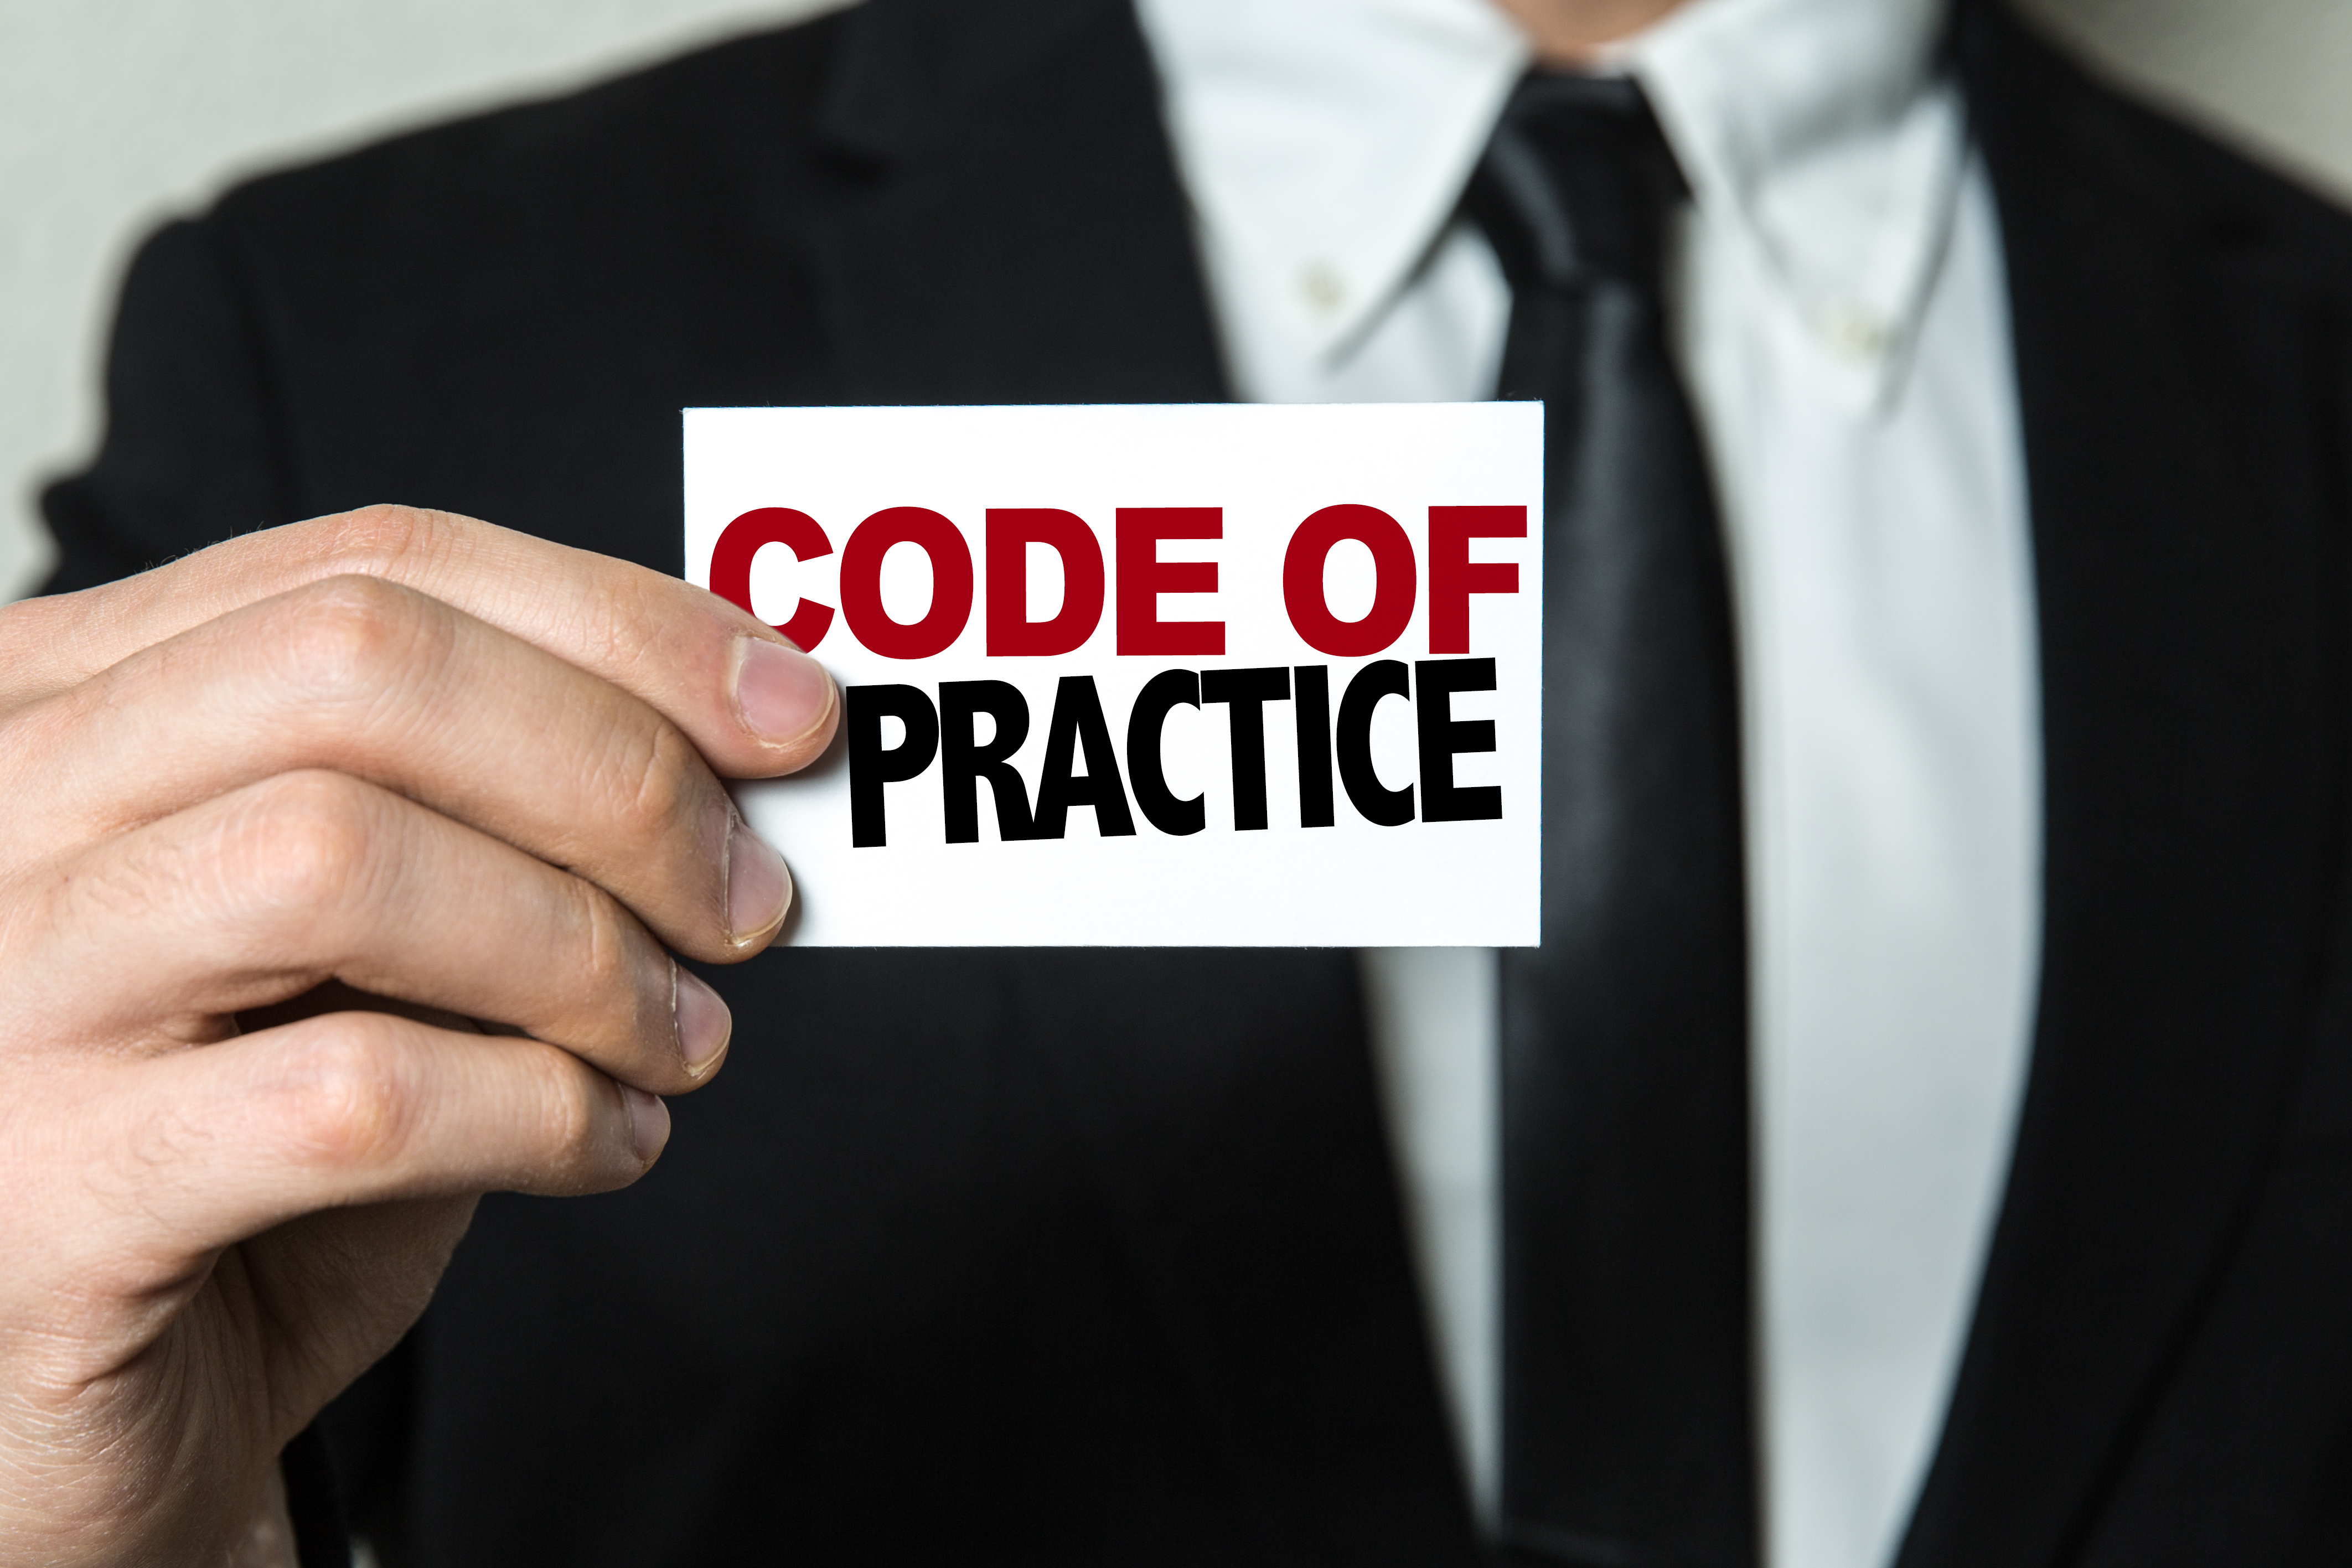 Code o practice